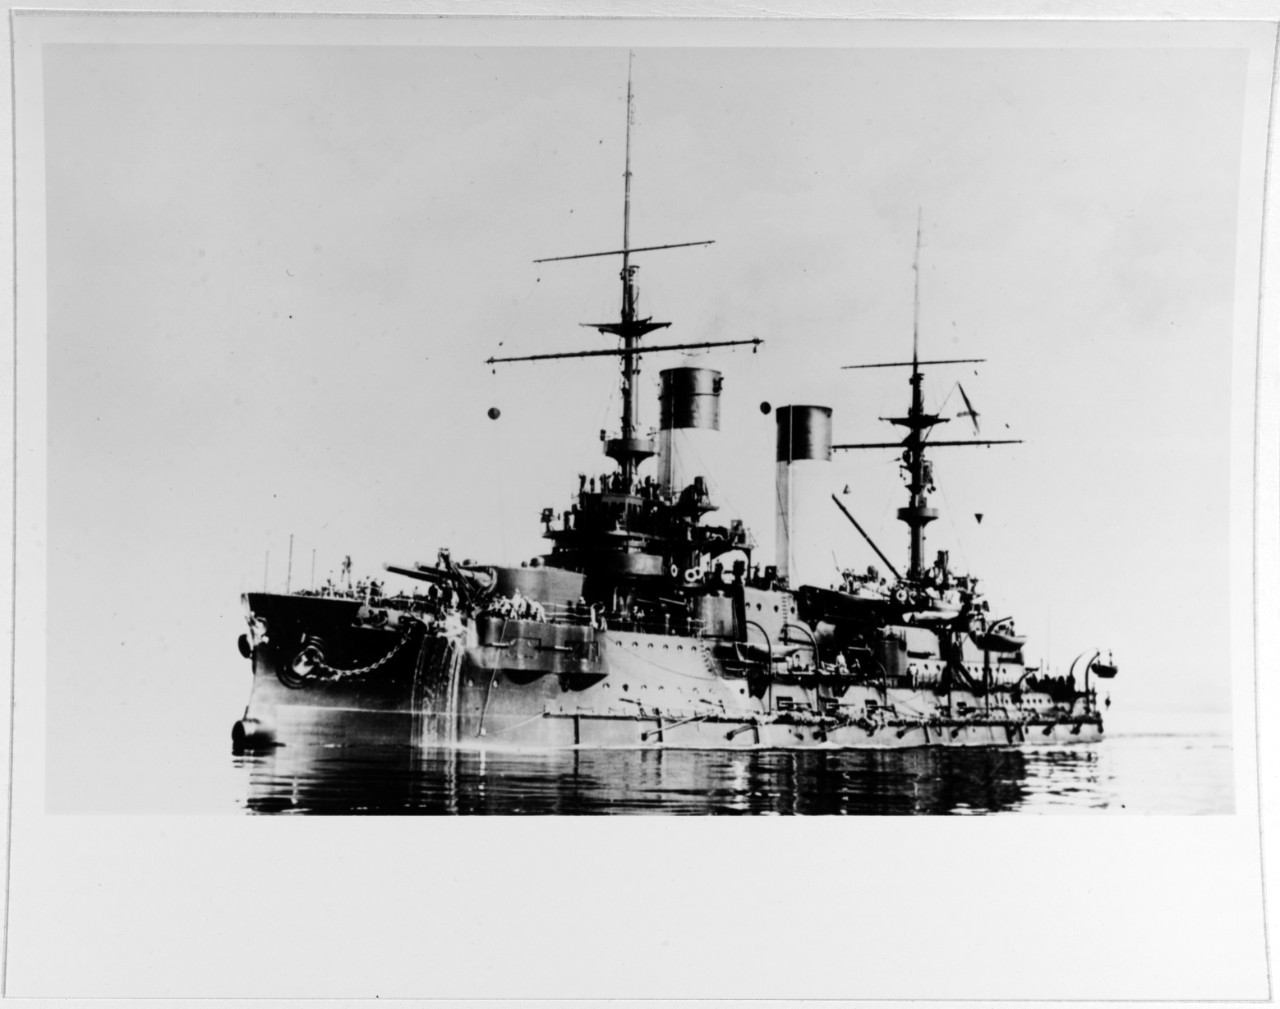 KNIAZ SUVOROV (Russian Battleship, 1902-05)